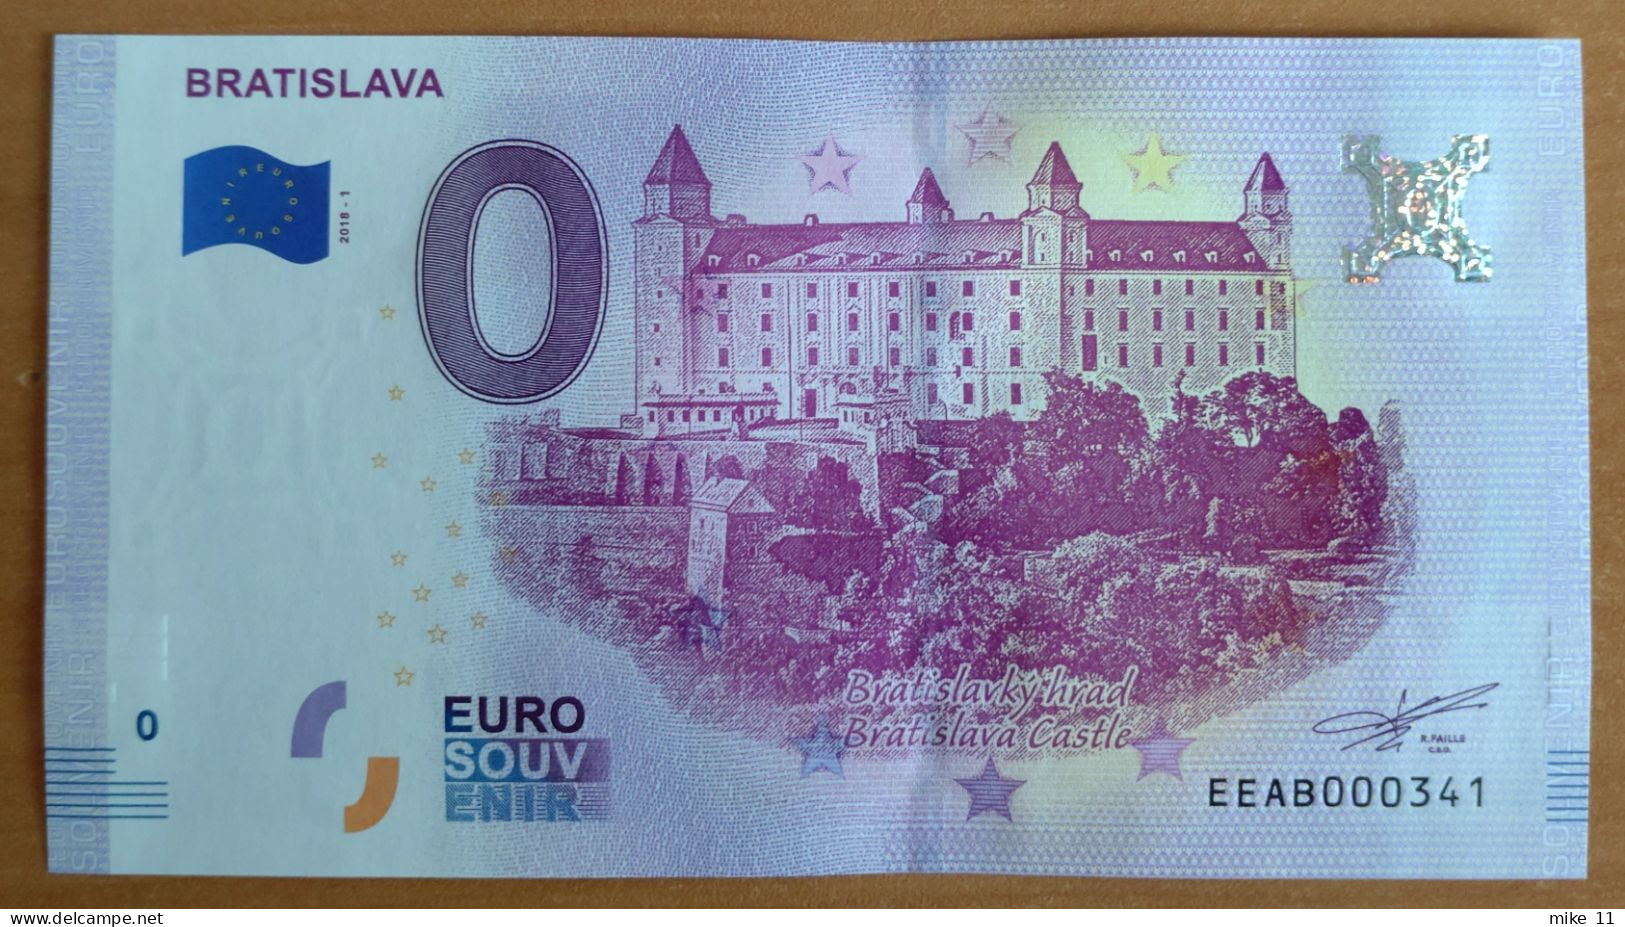 0 Euro Souvenir BRATISLAVA Slovakia EEAB 2018-1 Nr. 341 - Other - Europe